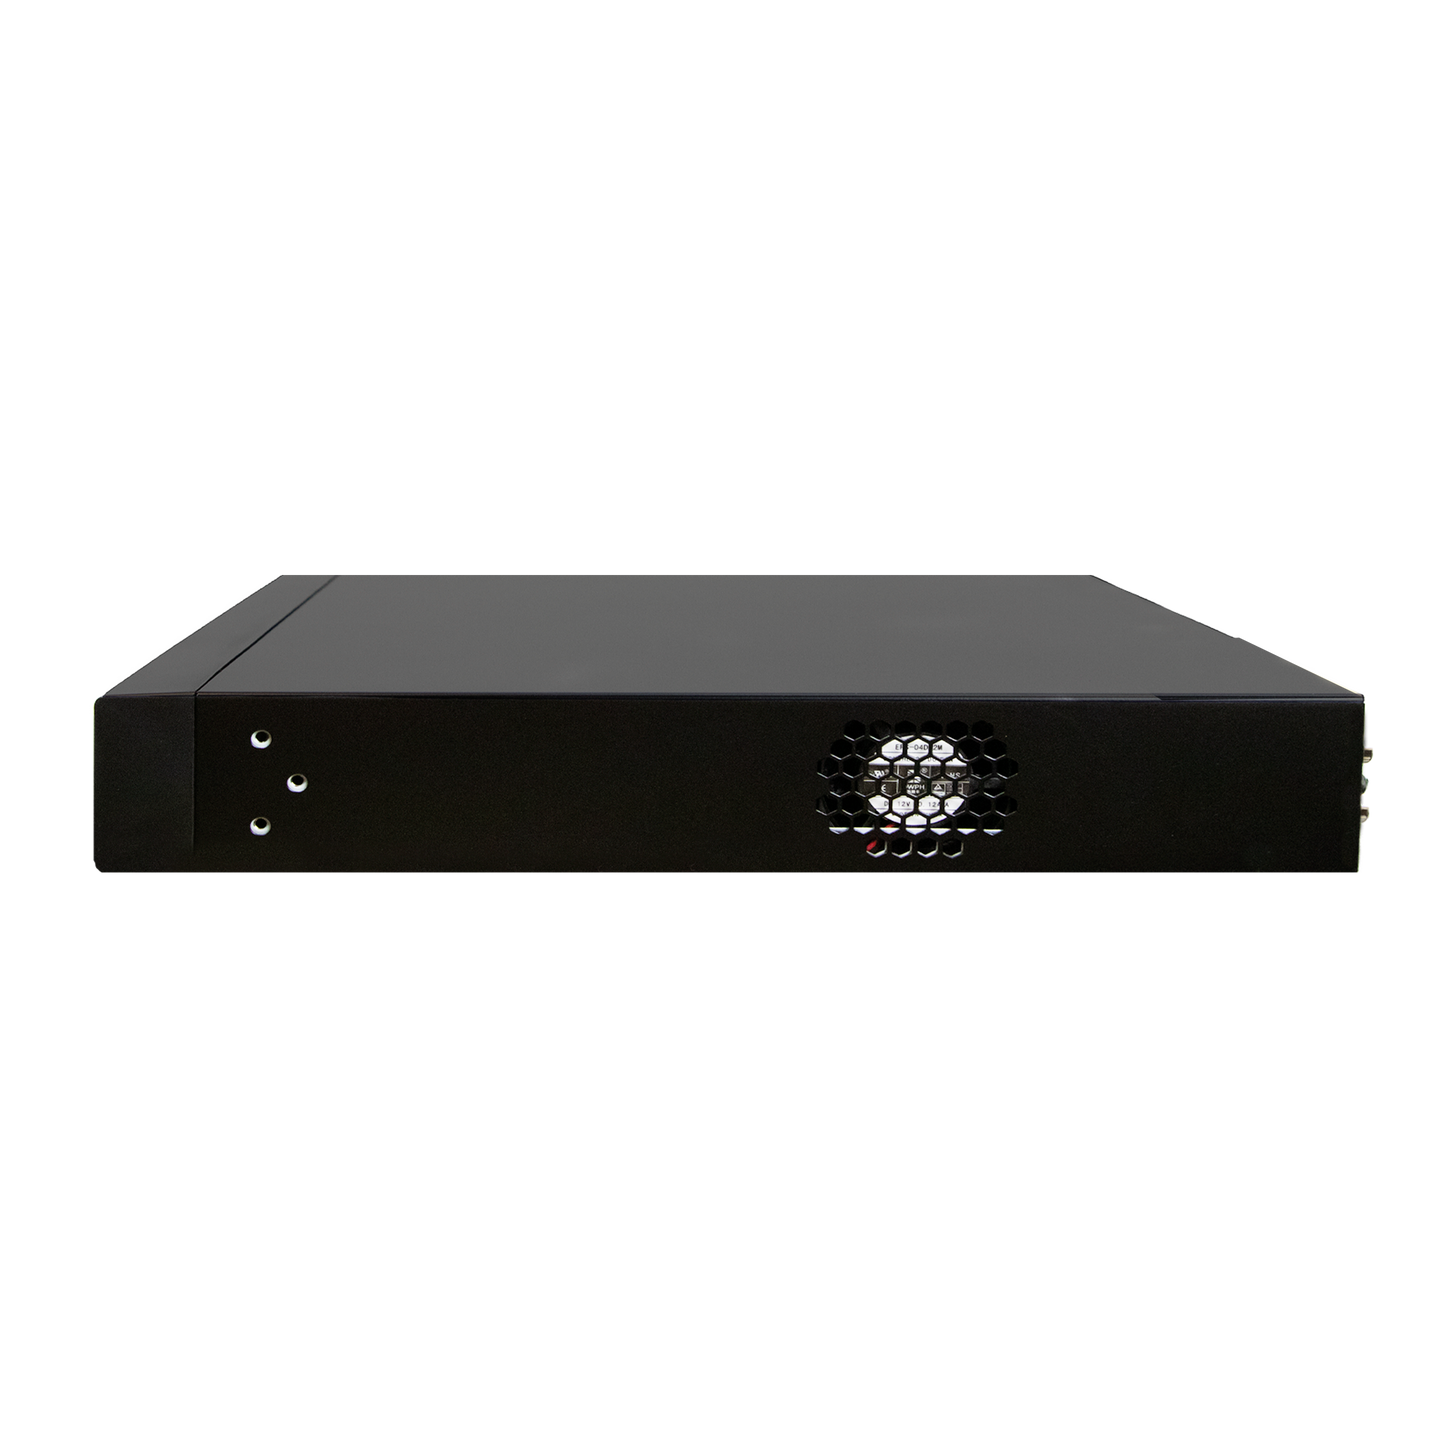 24 Channel Hybrid Digital Video Recorder 8 Configurable Hybrid Channels (TVI or IP) plus 8 IP Channels plus 8 TVI Channels